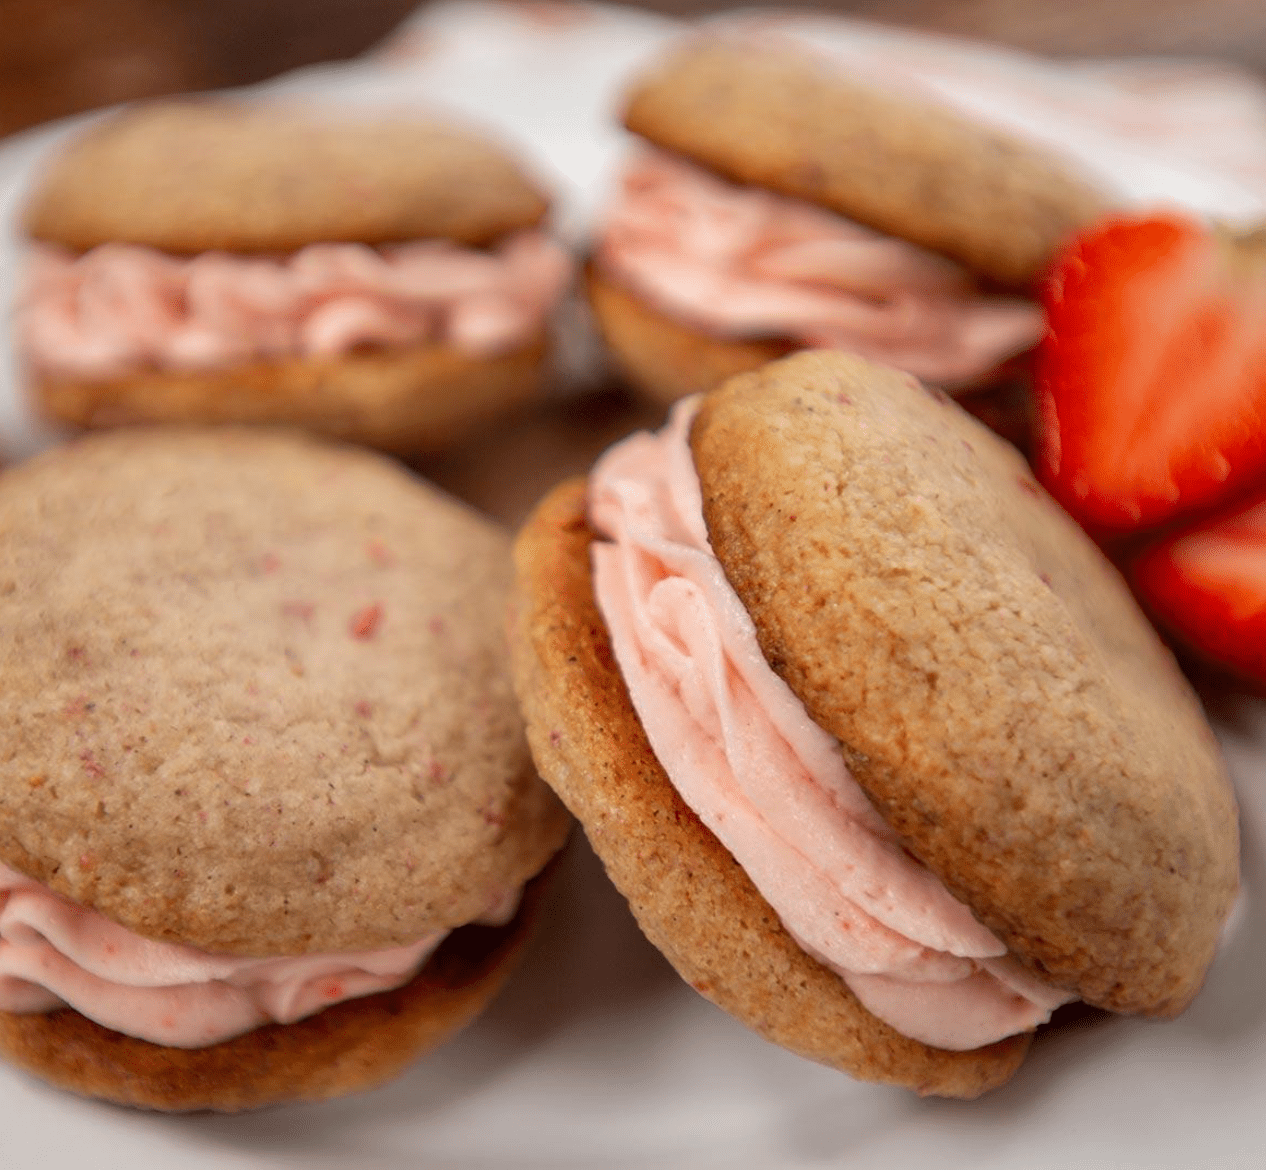 Strawberry Sandwich Cookies